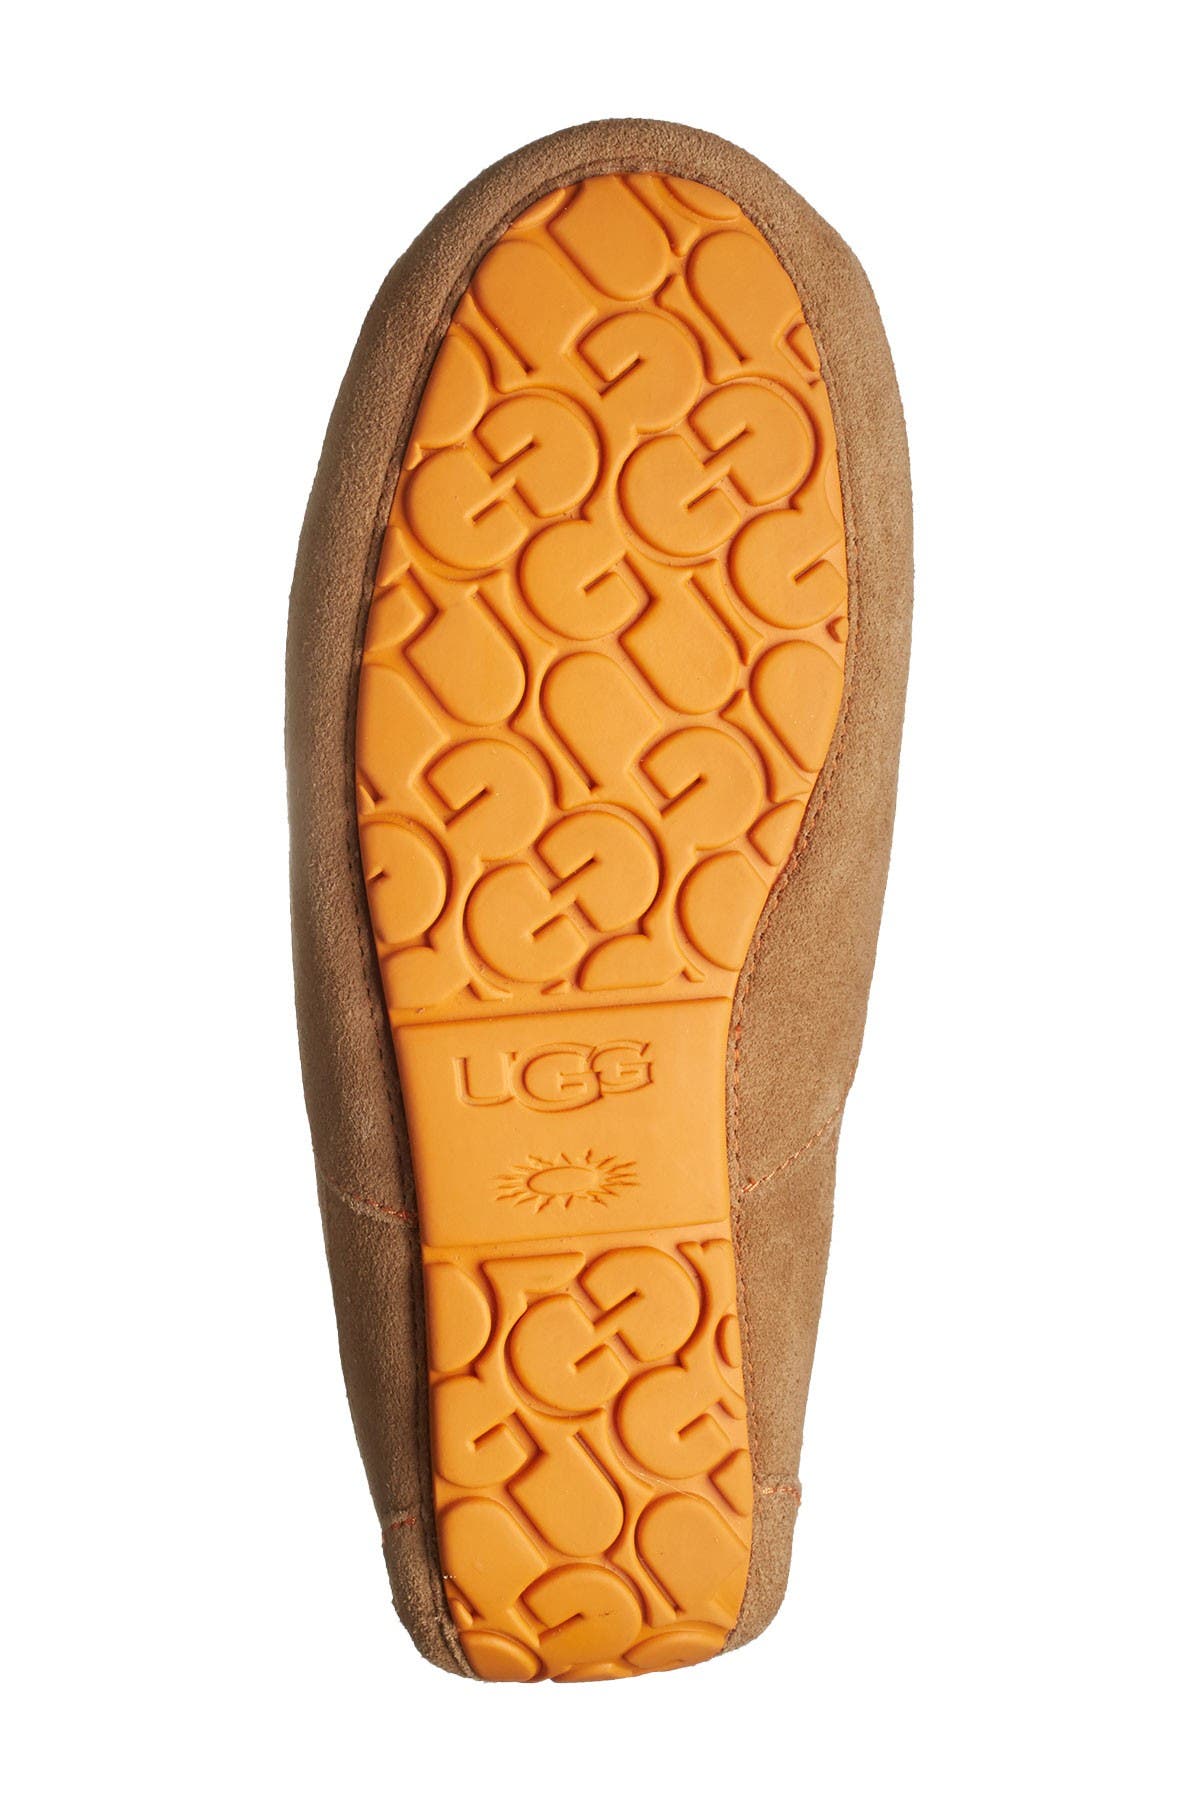 ascot uggpure lined slipper